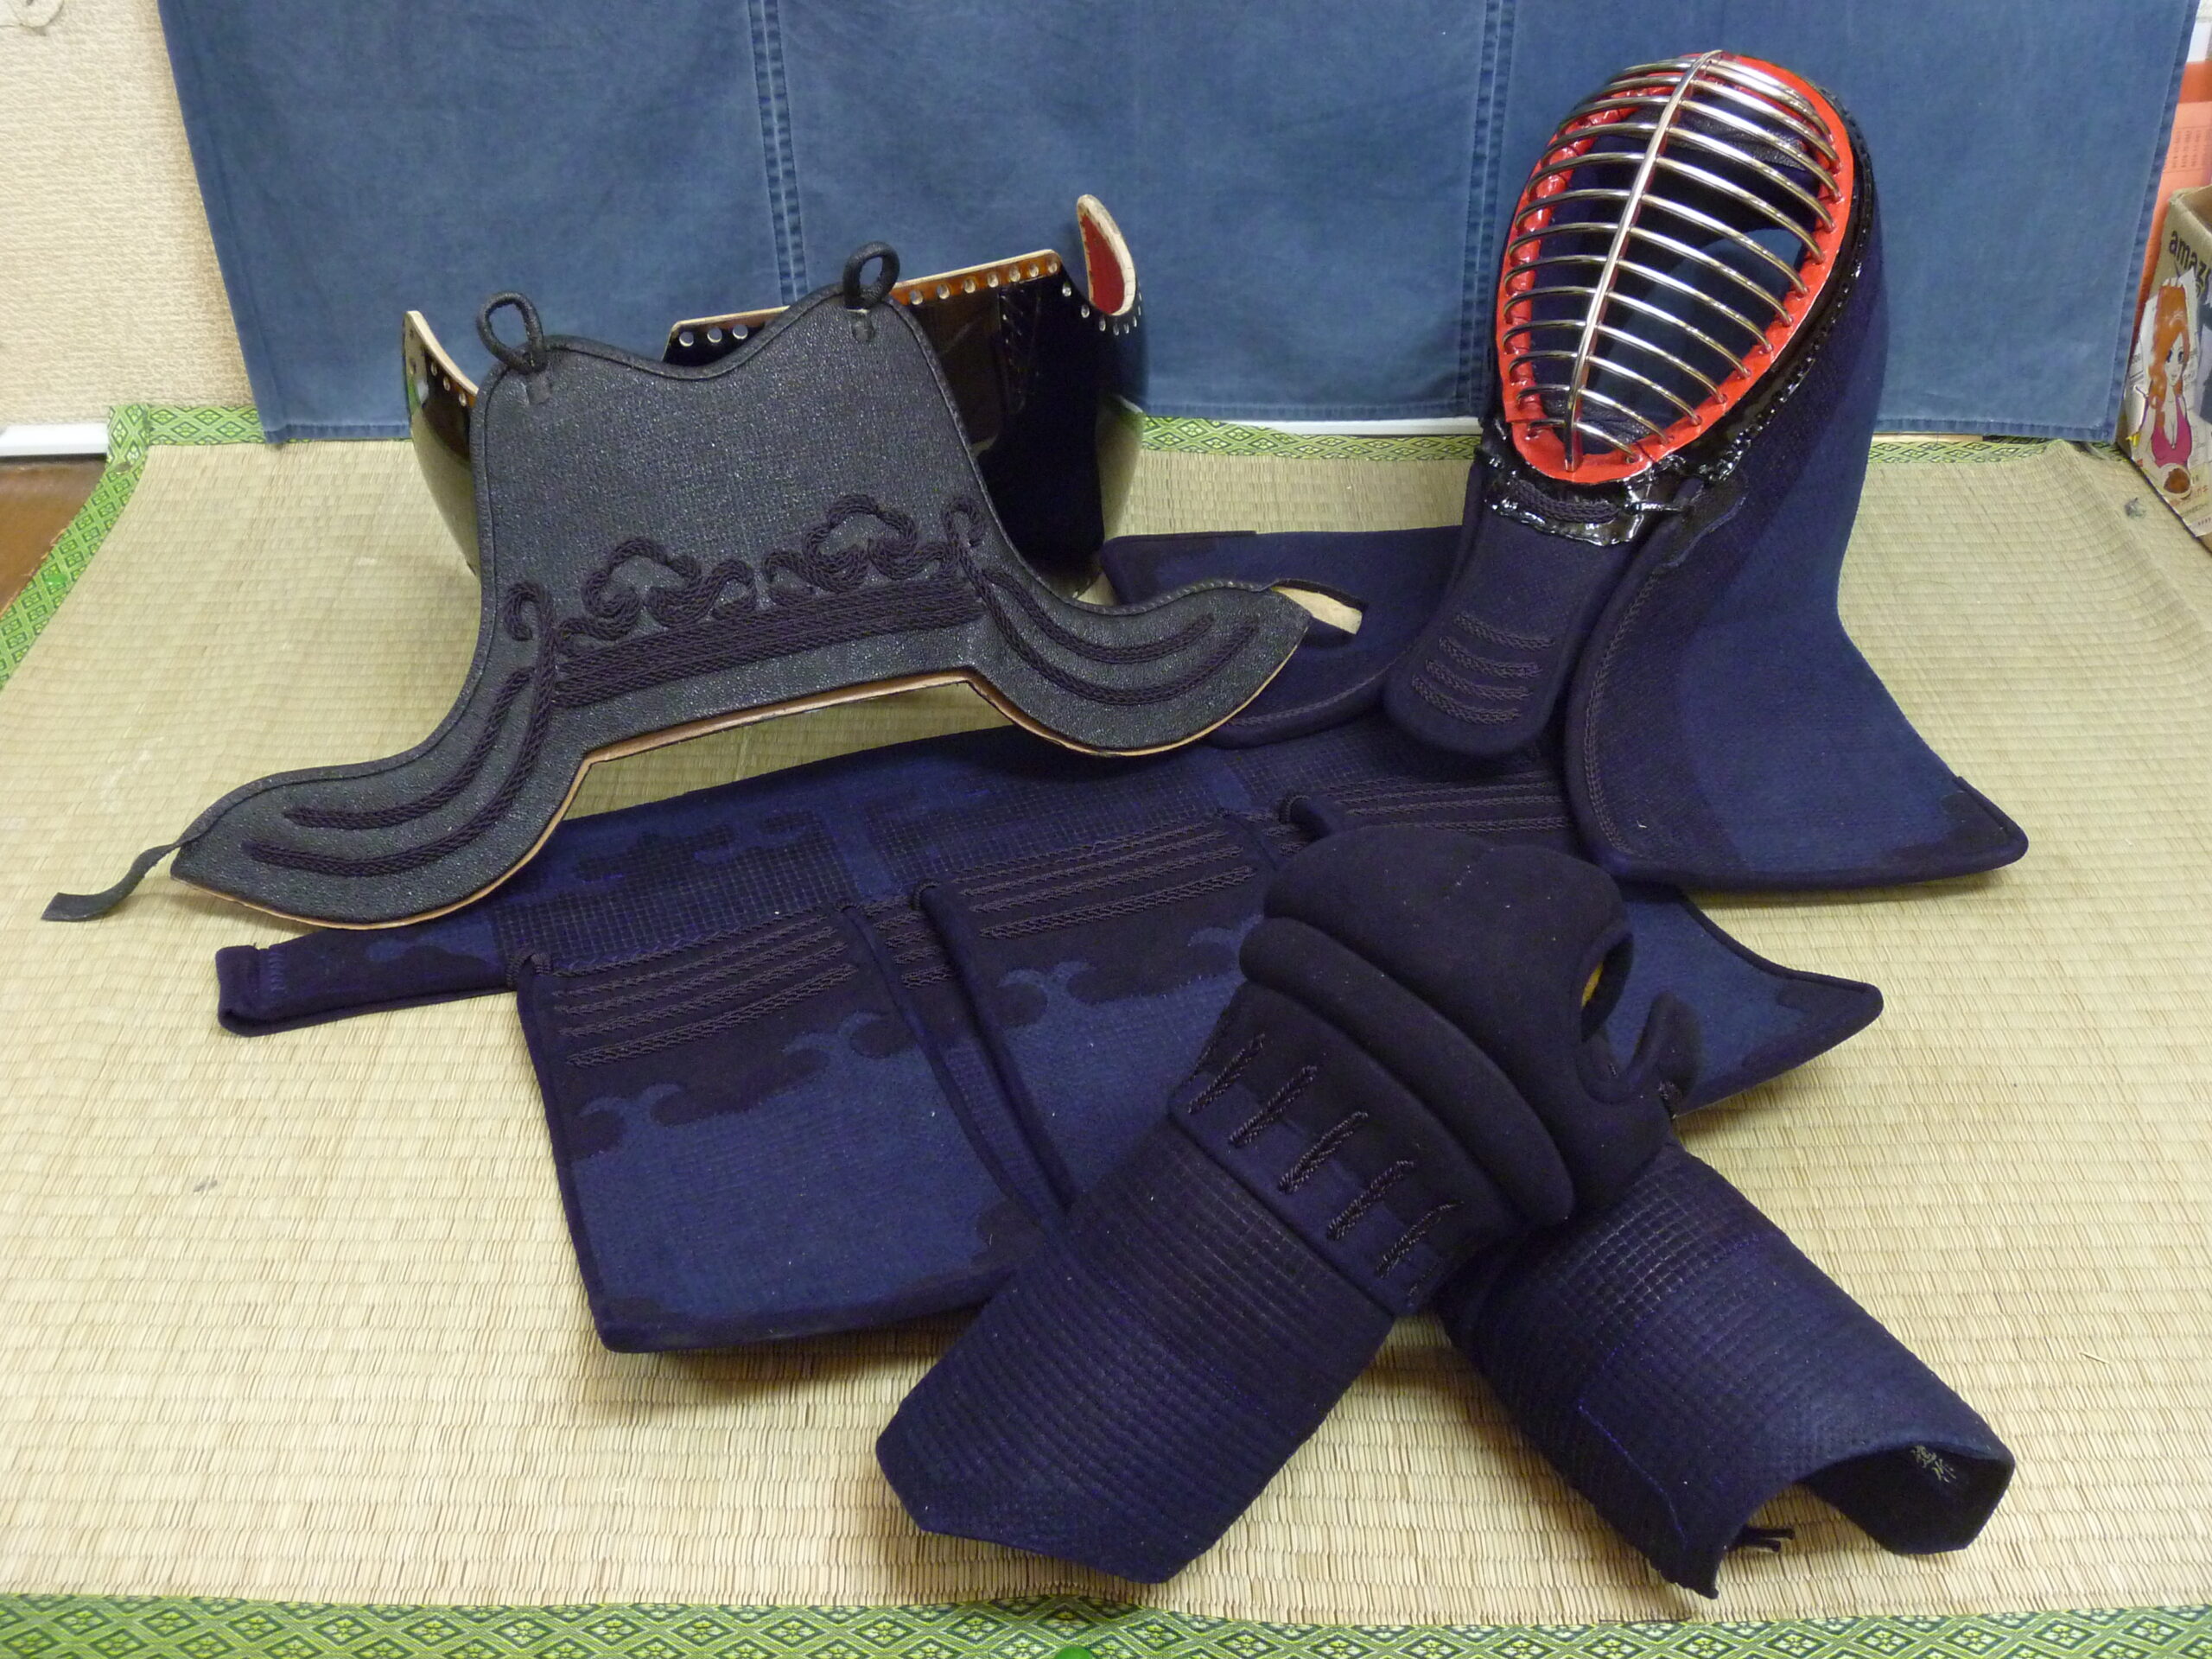 “Tezashi” Hand stitch Kendo gear | Product | 剣道具なら武道市原・木更津・船橋